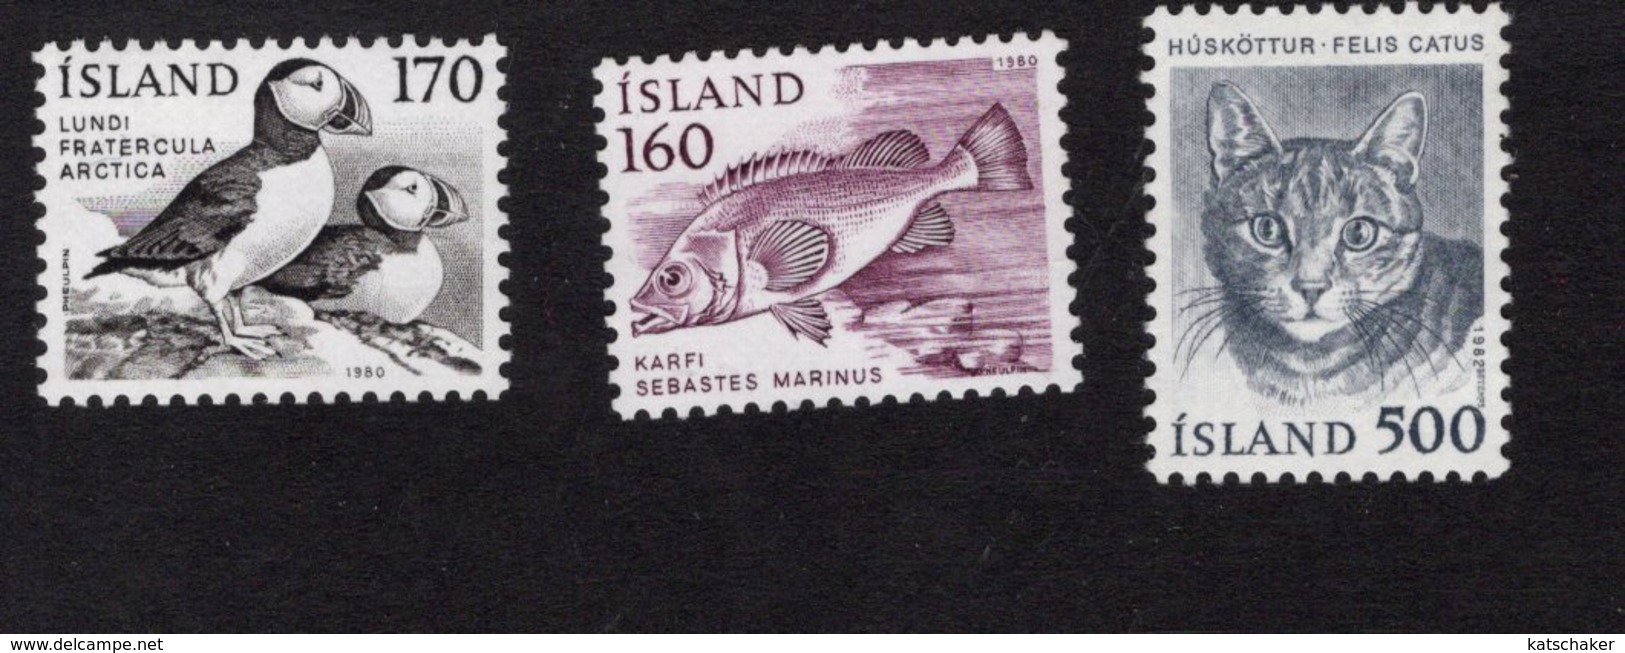 673724575 ICELAND 1982 POSTFRIS MINT NEVER HINGED POSTFRISCH EINWANDFREI SCOTT 556 557 558 BIRD FISH CAT - Neufs